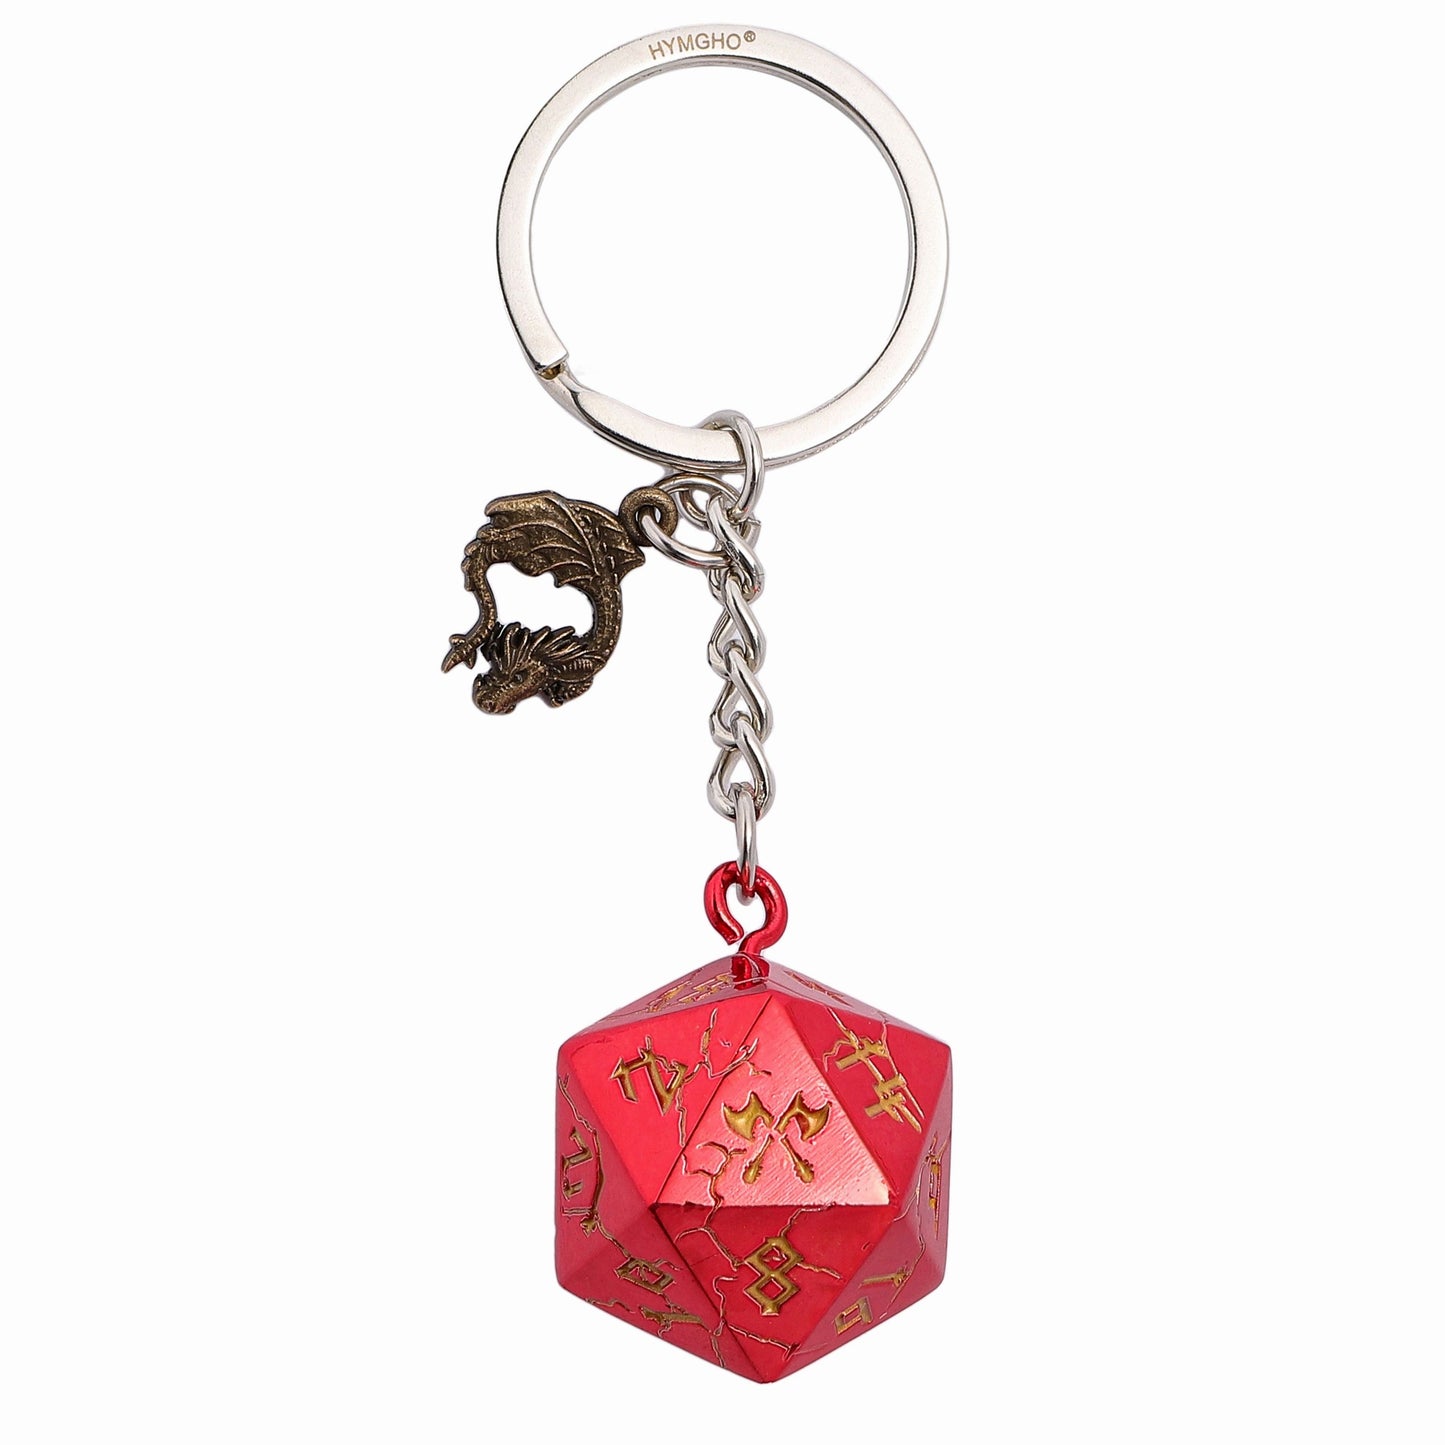 D20 keychain with HYMGHO dragon charm-Barbarian Red